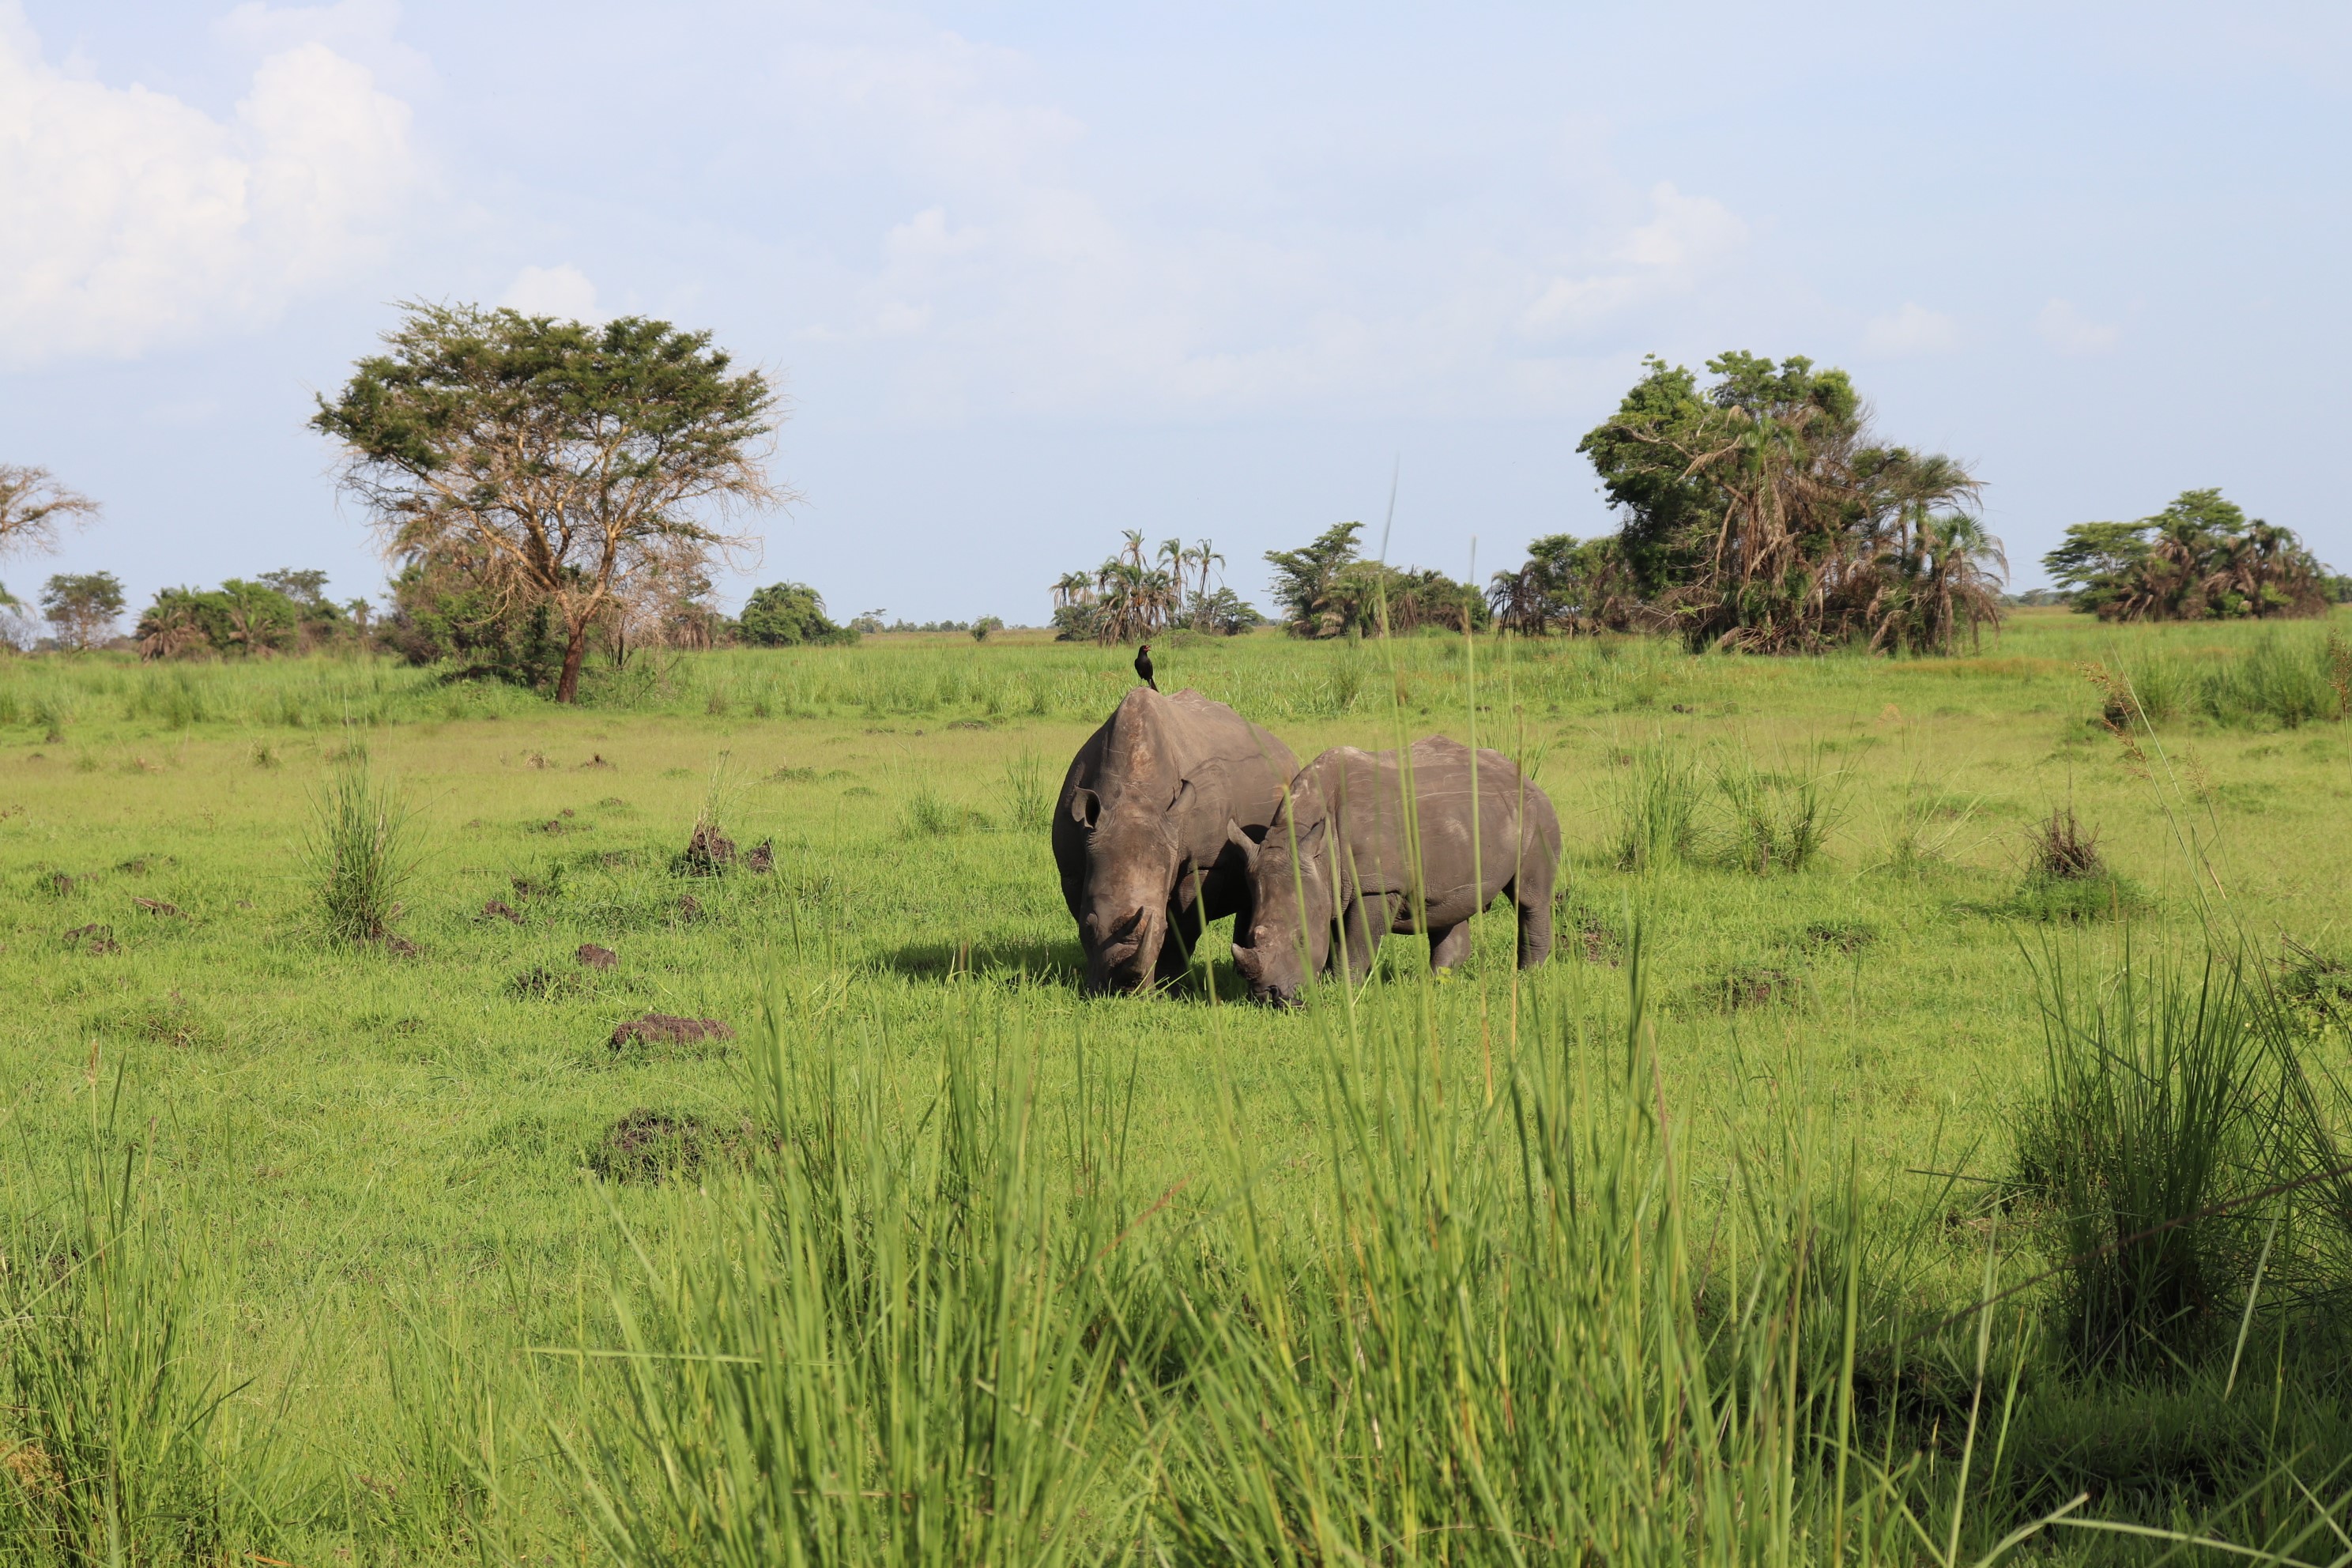 Two rhinos at Ziwa Wildlife Sanctuary, Uganda.